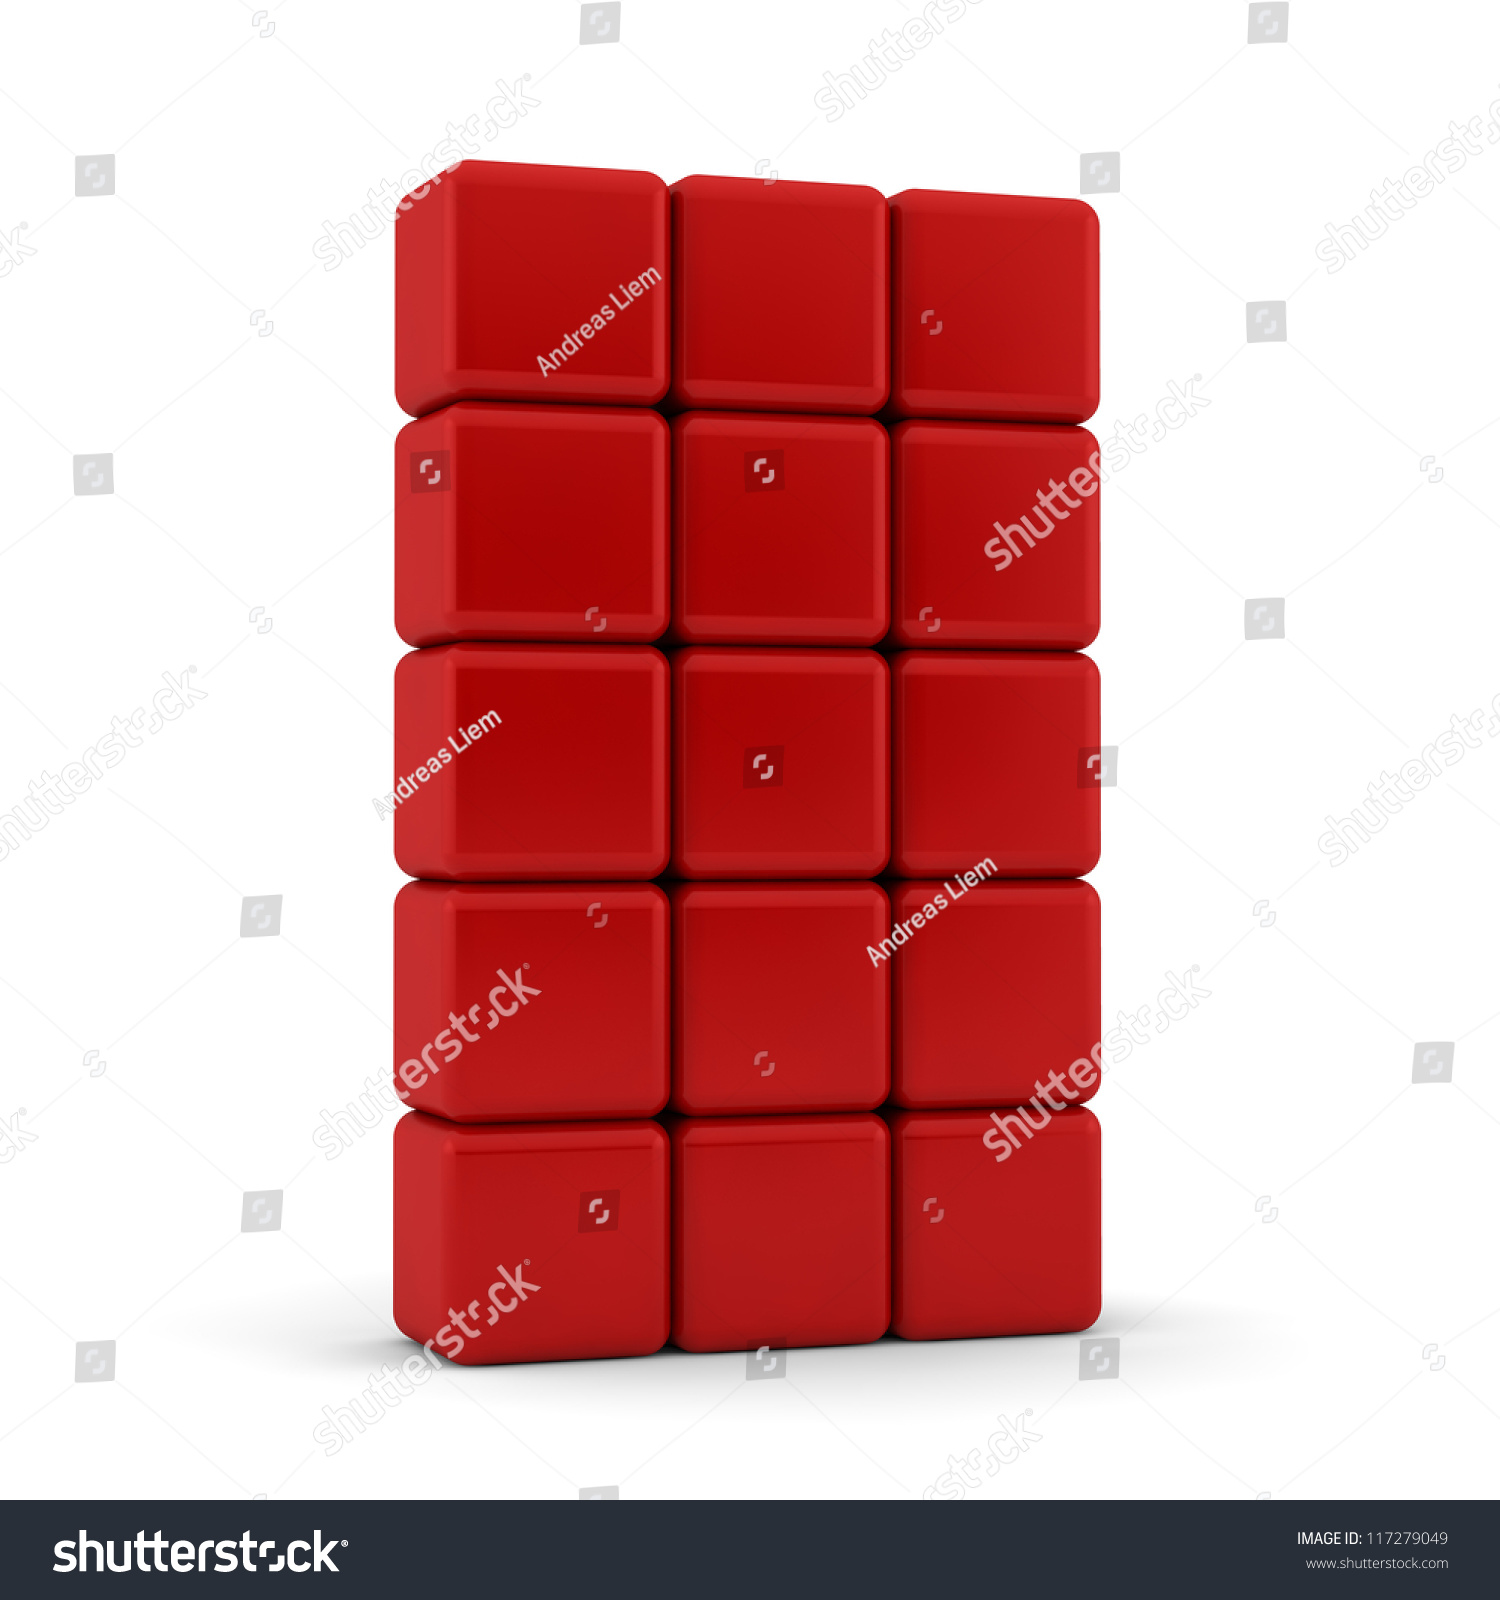 Html 3d cube